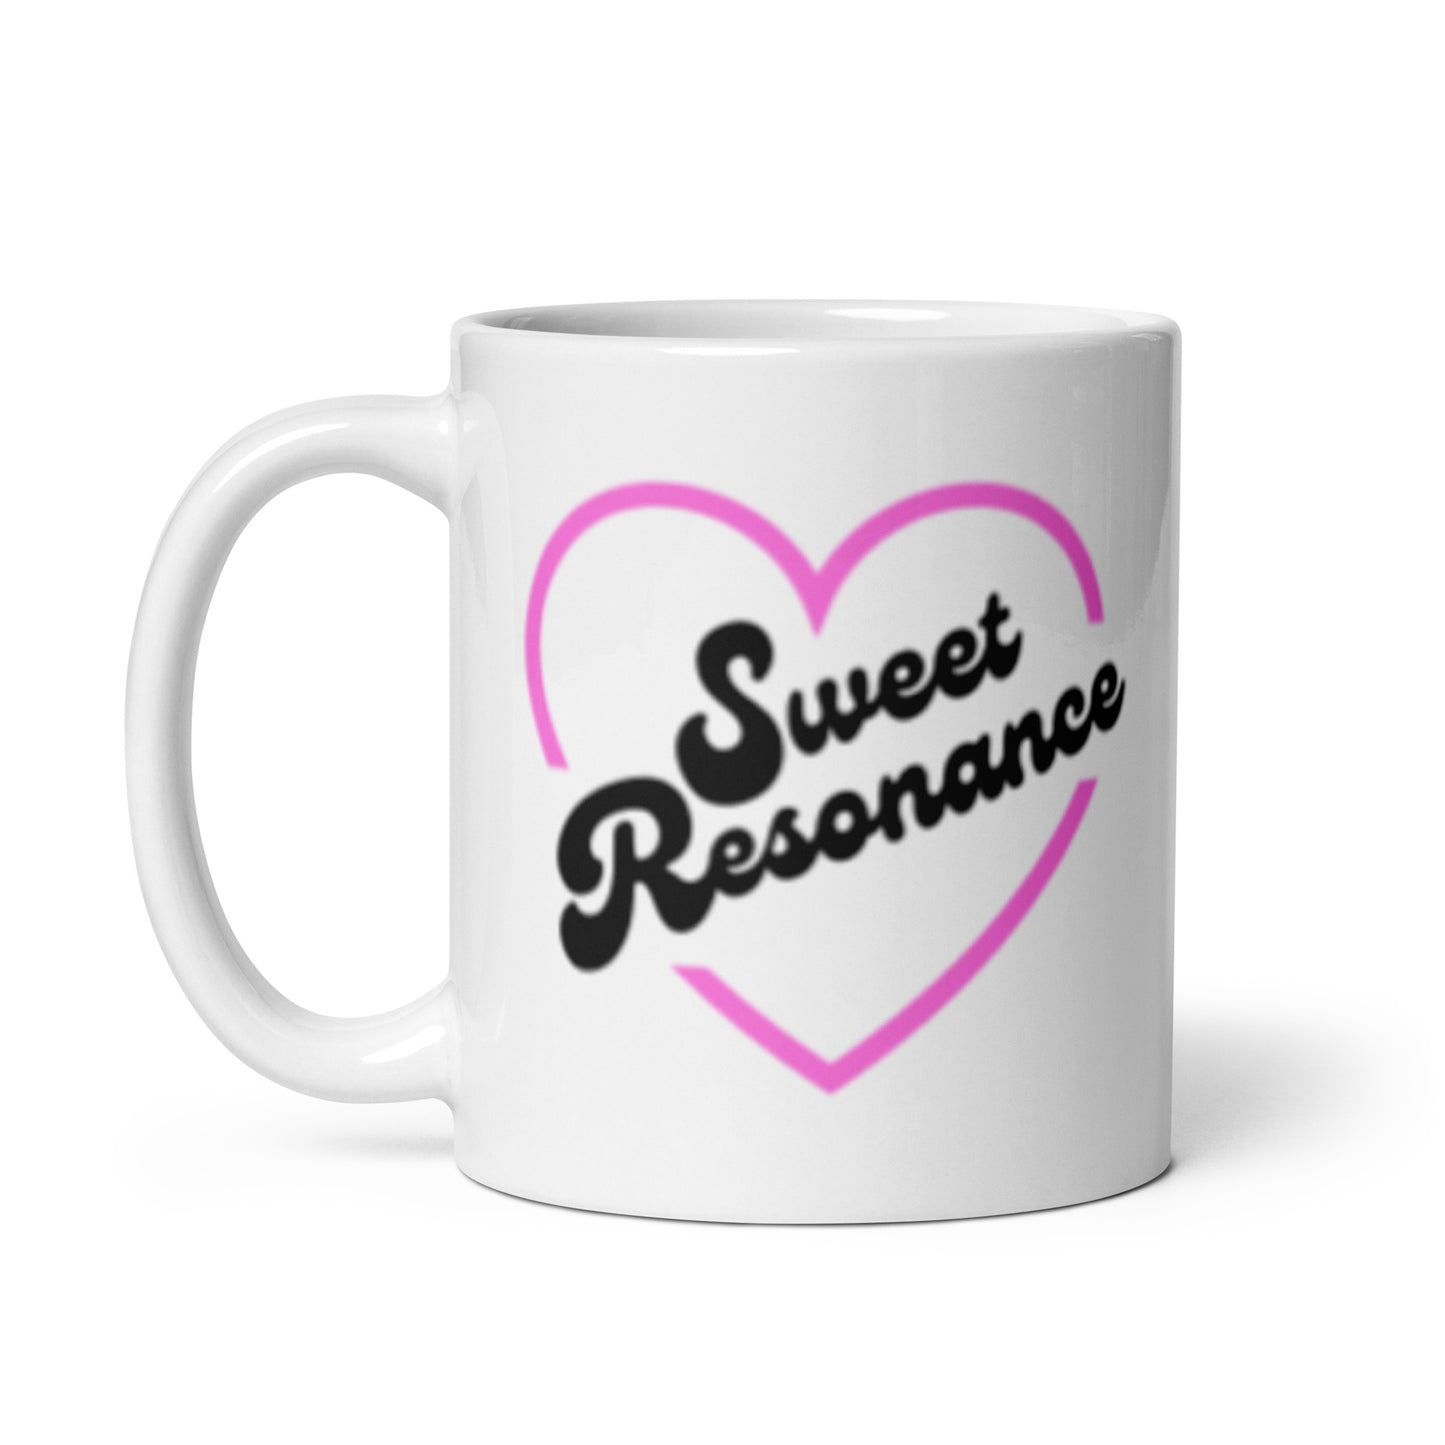 Sweet Resonance IPB Liz & Raahosh Mug